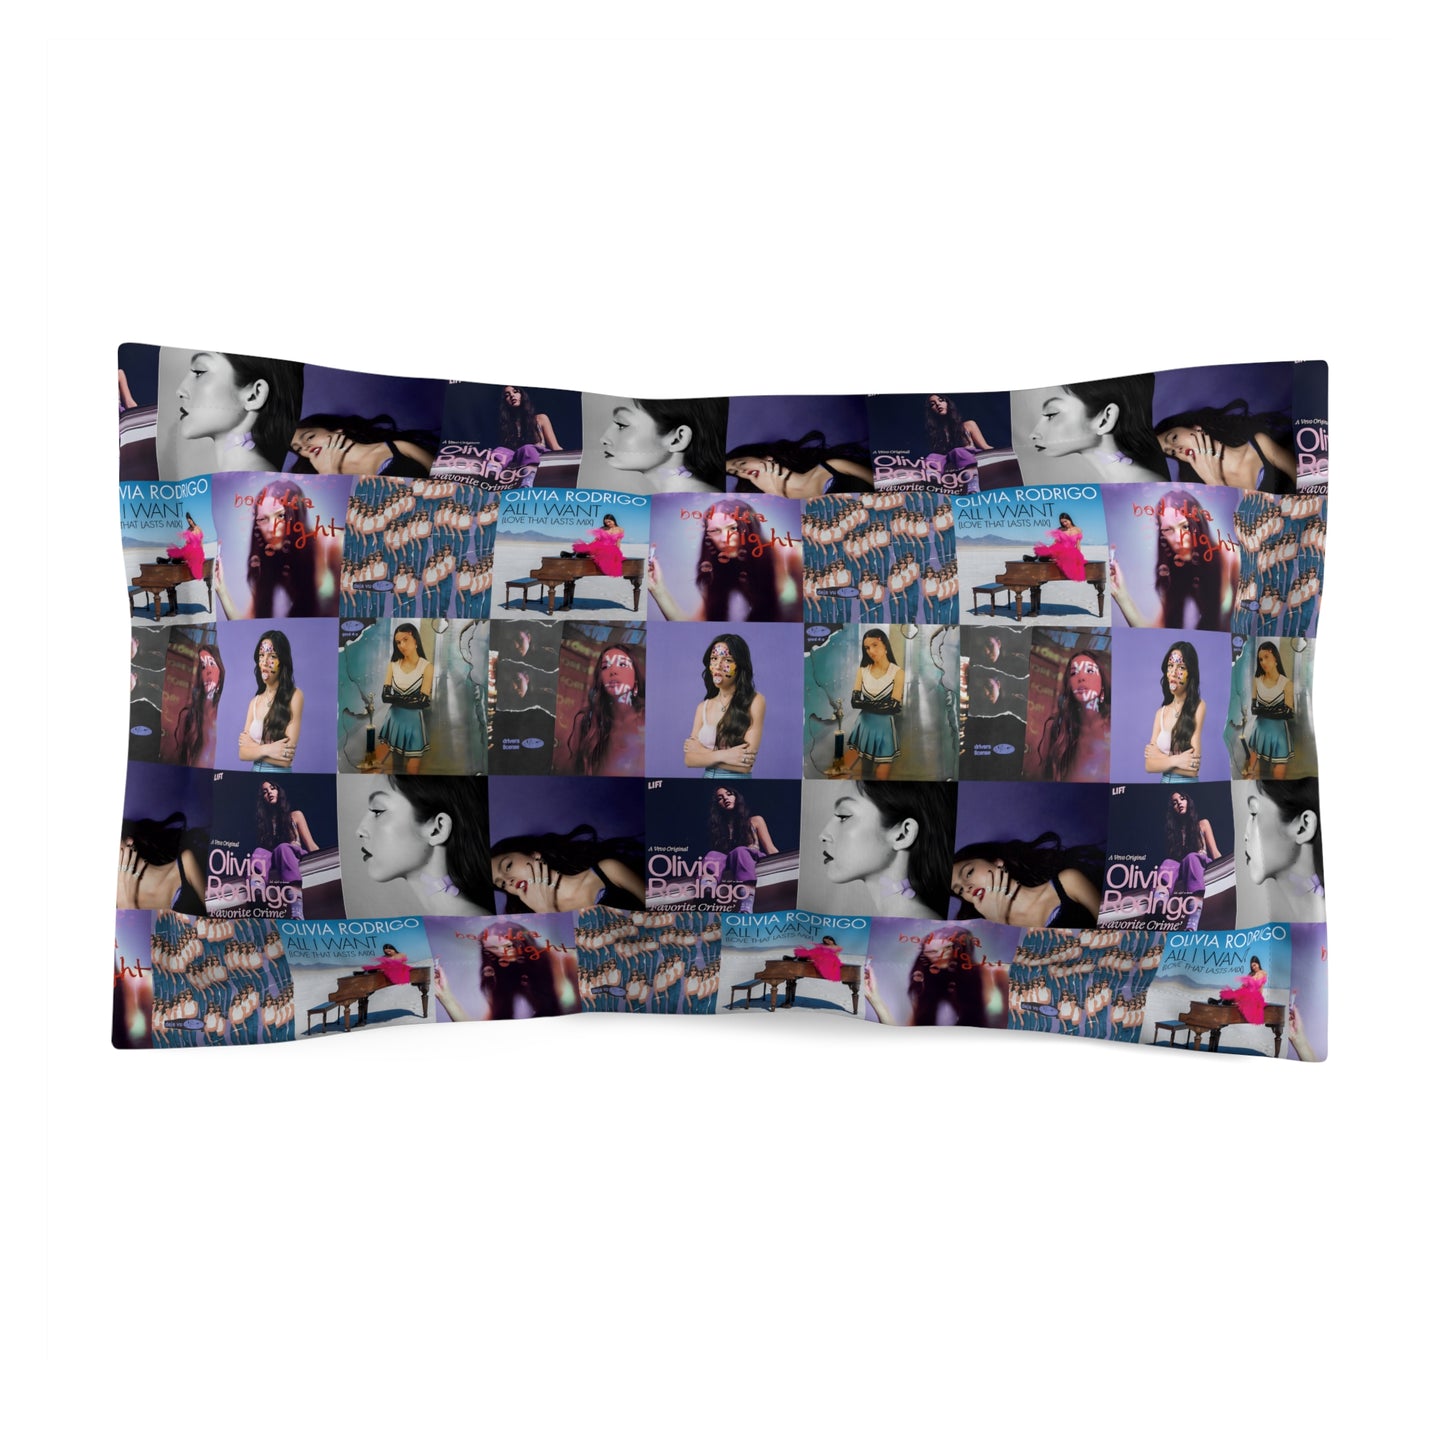 Olivia Rodrigo Album Cover Art Collage Microfiber Pillow Sham